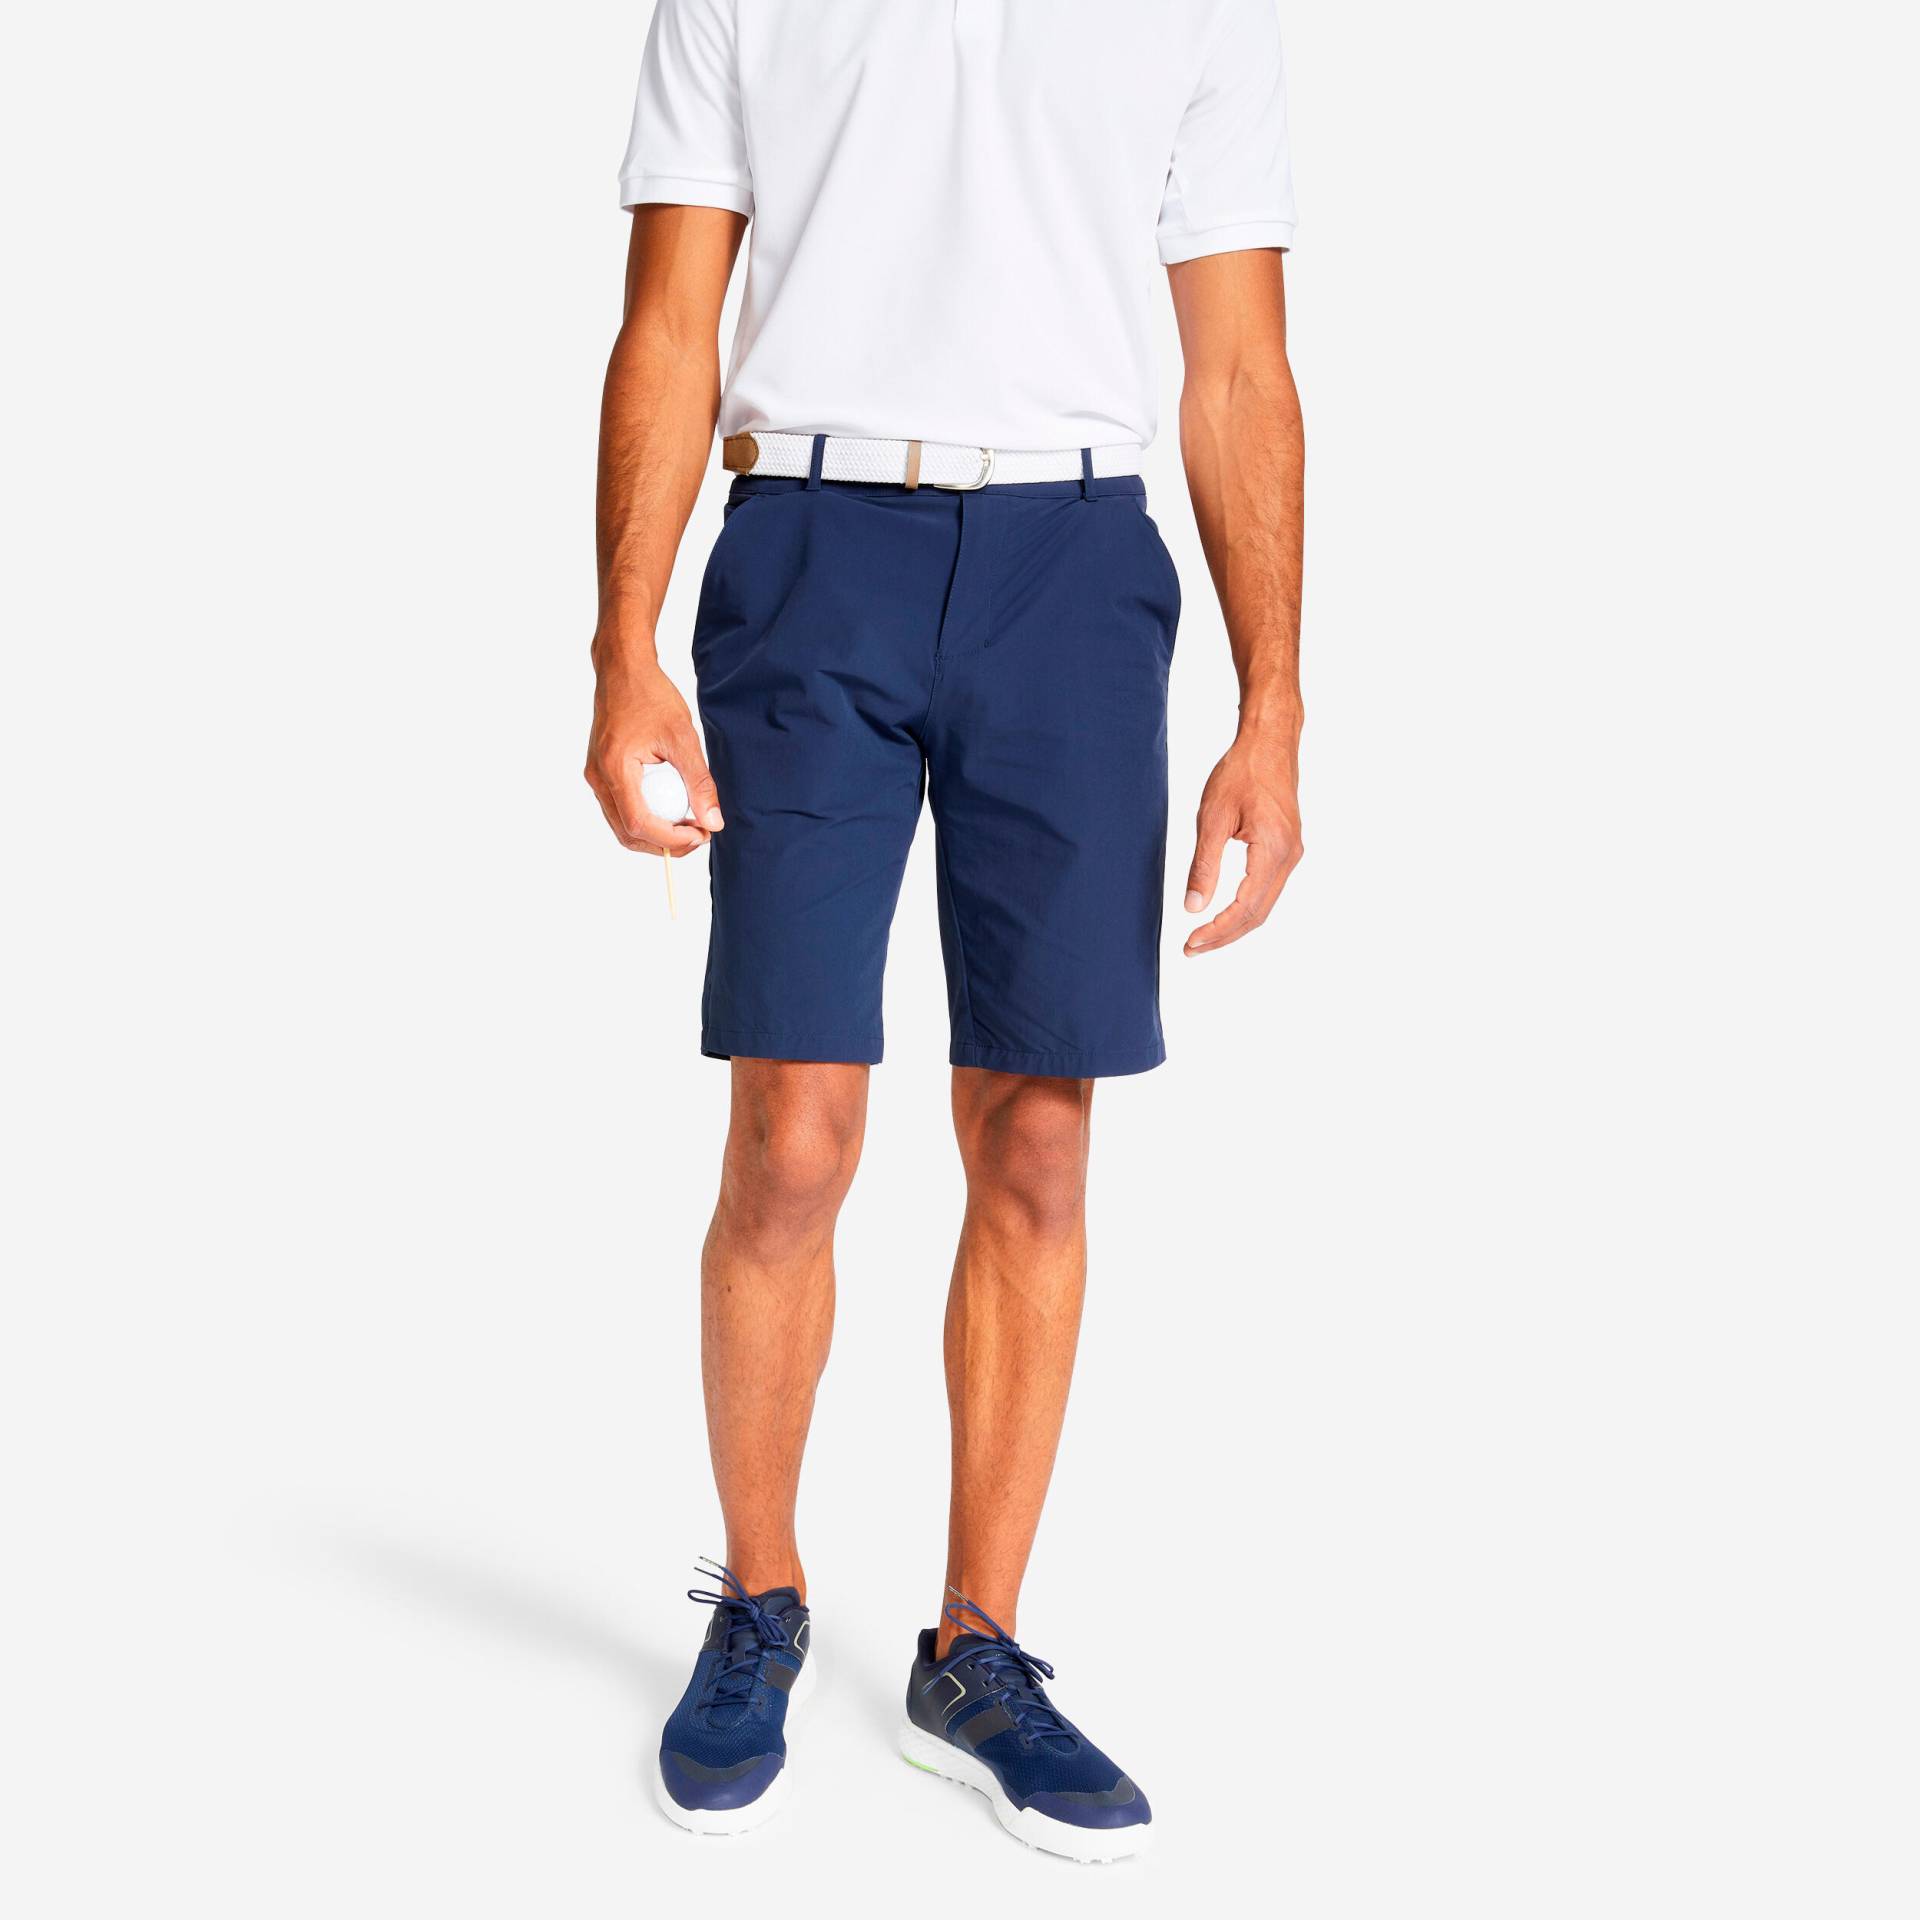 Herren Bermuda Shorts - WW500 marineblau von INESIS